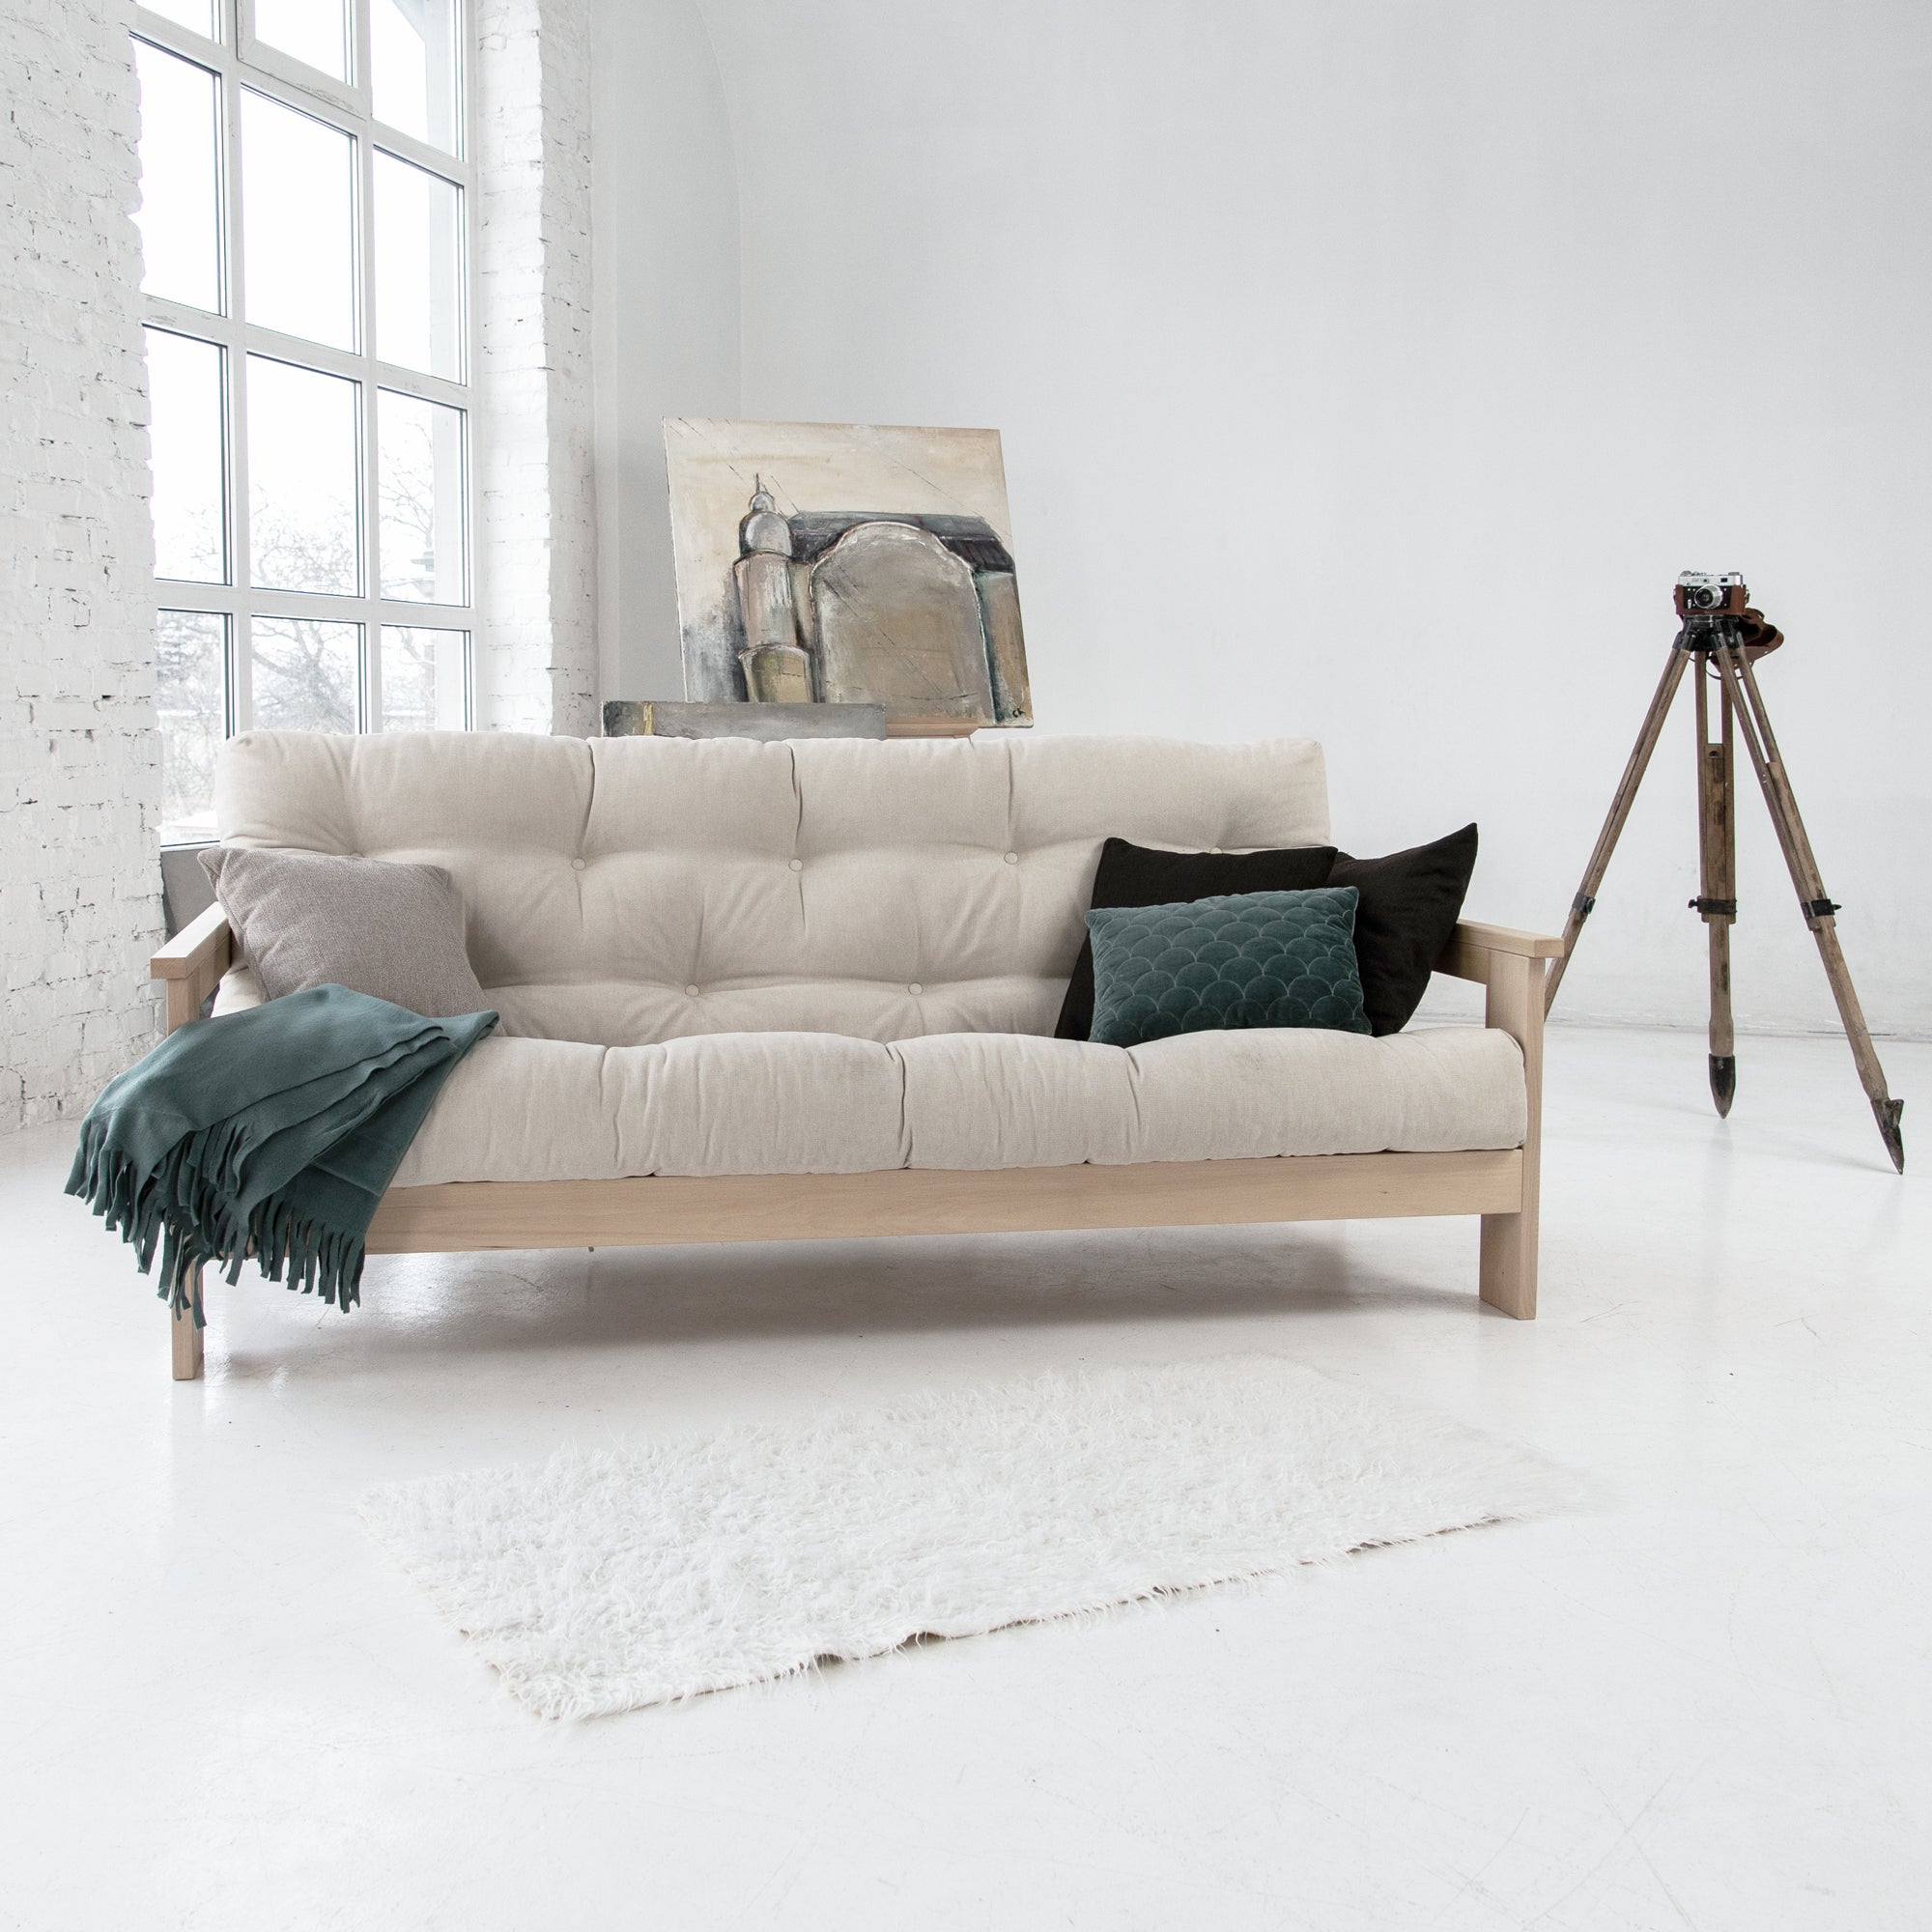 MEXICO Folding Sofa Bed, Beech Wood Frame, Natural Colour-creamy fabric colour-interior view